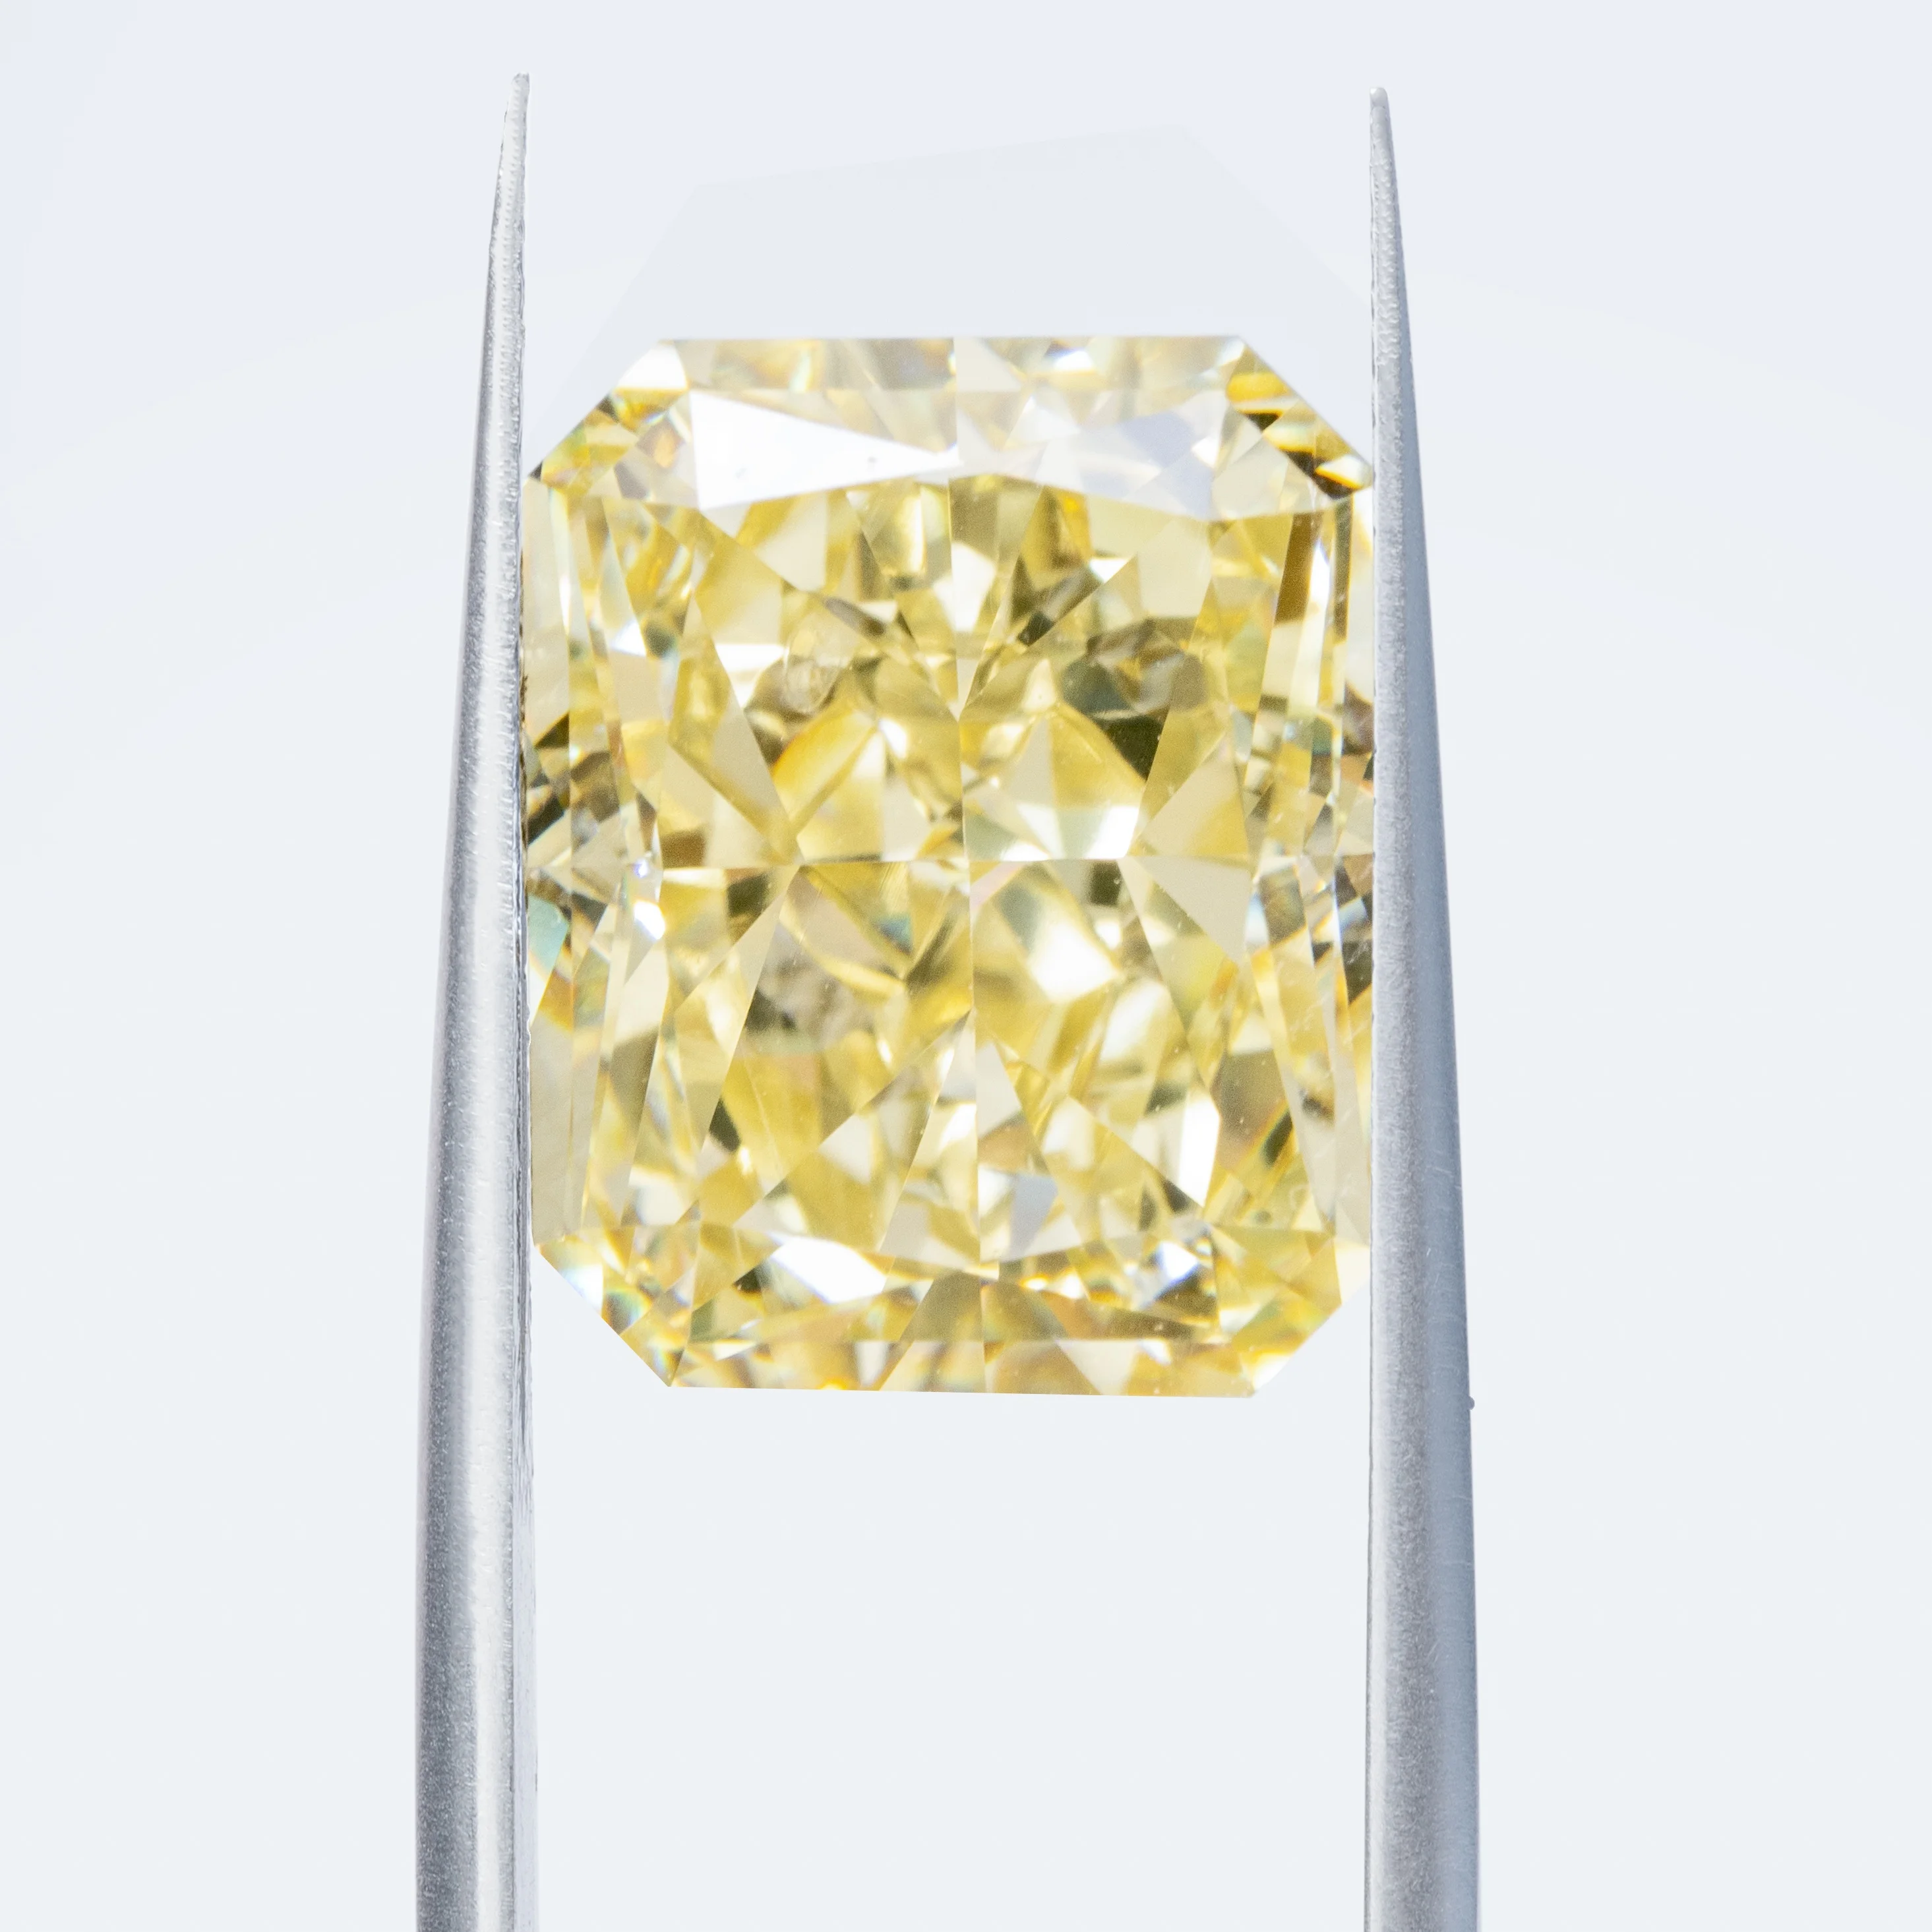 Octagon Ice Crushed Cut Light Yellow Color CZ Stones Loose Gemstones Cubic Zirconia